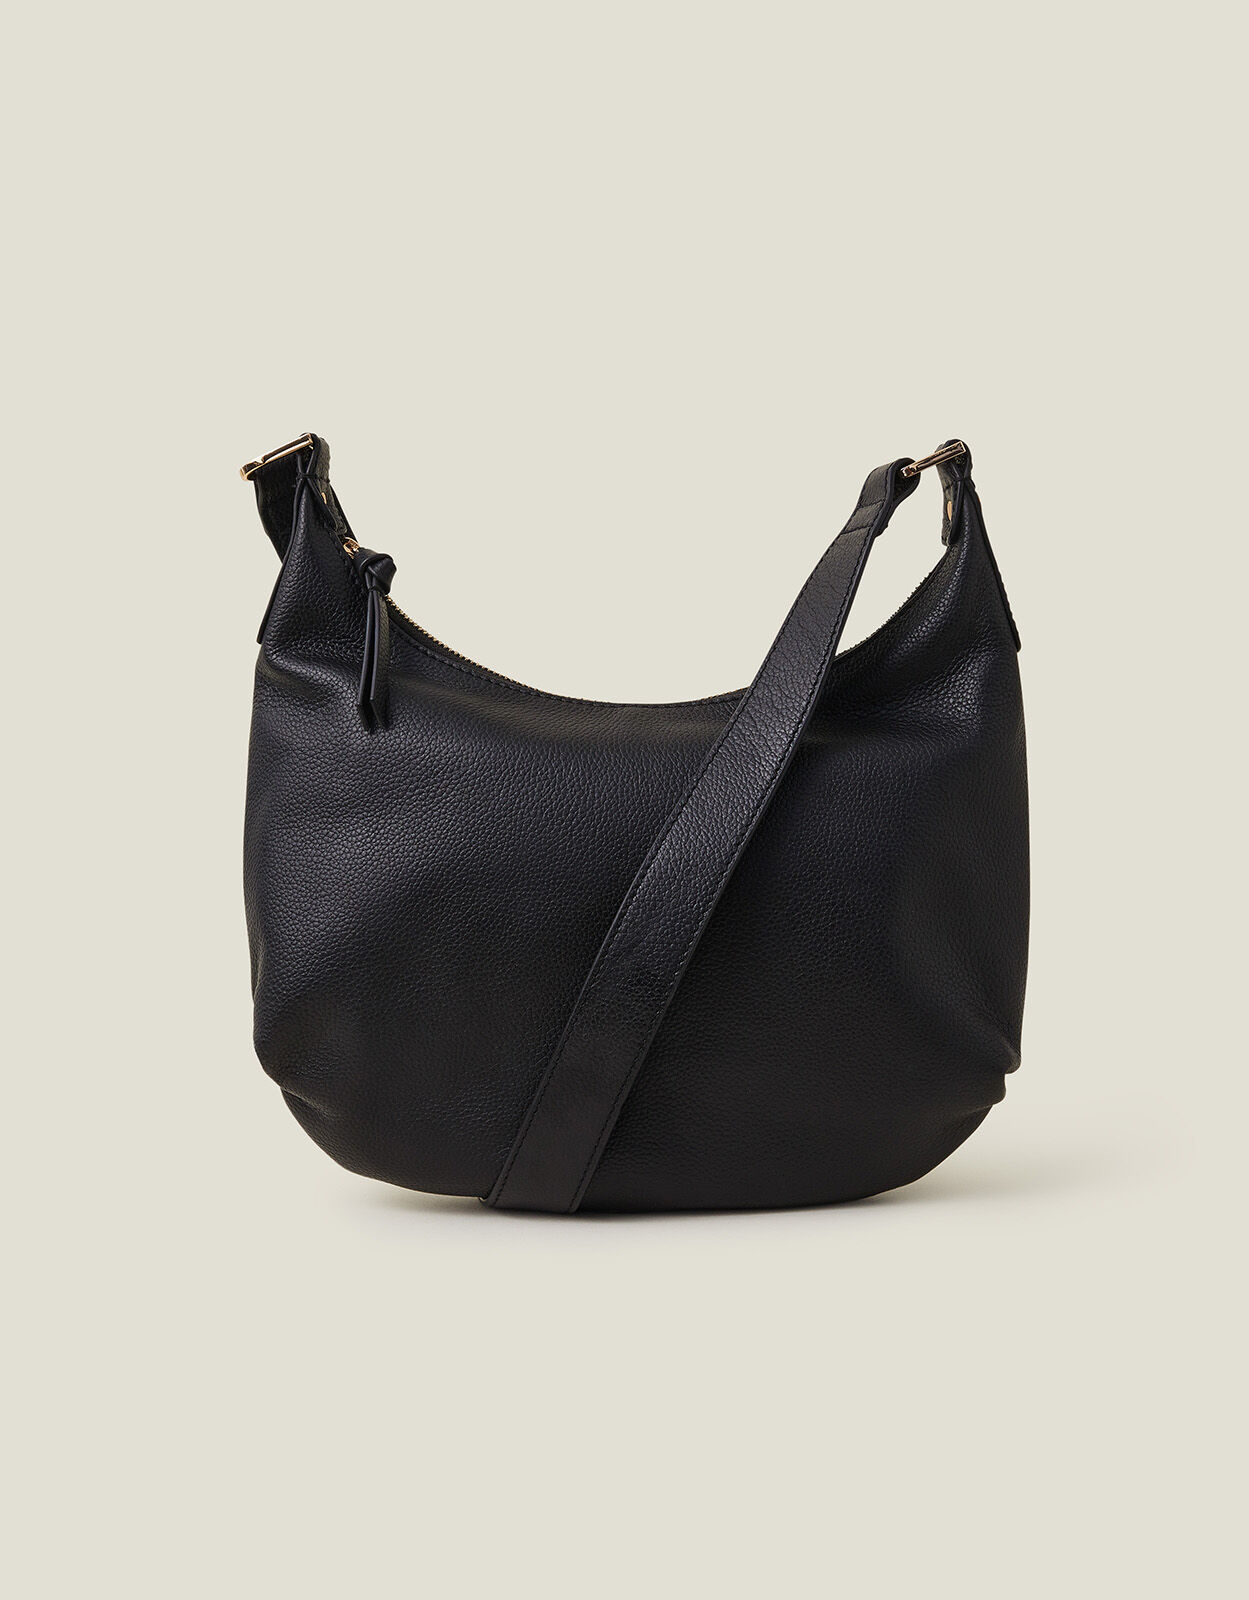 Black Small Messenger Bag Sling Bag for Women Black Leather - Etsy | Bags,  Small messenger bag, Designer leather bags